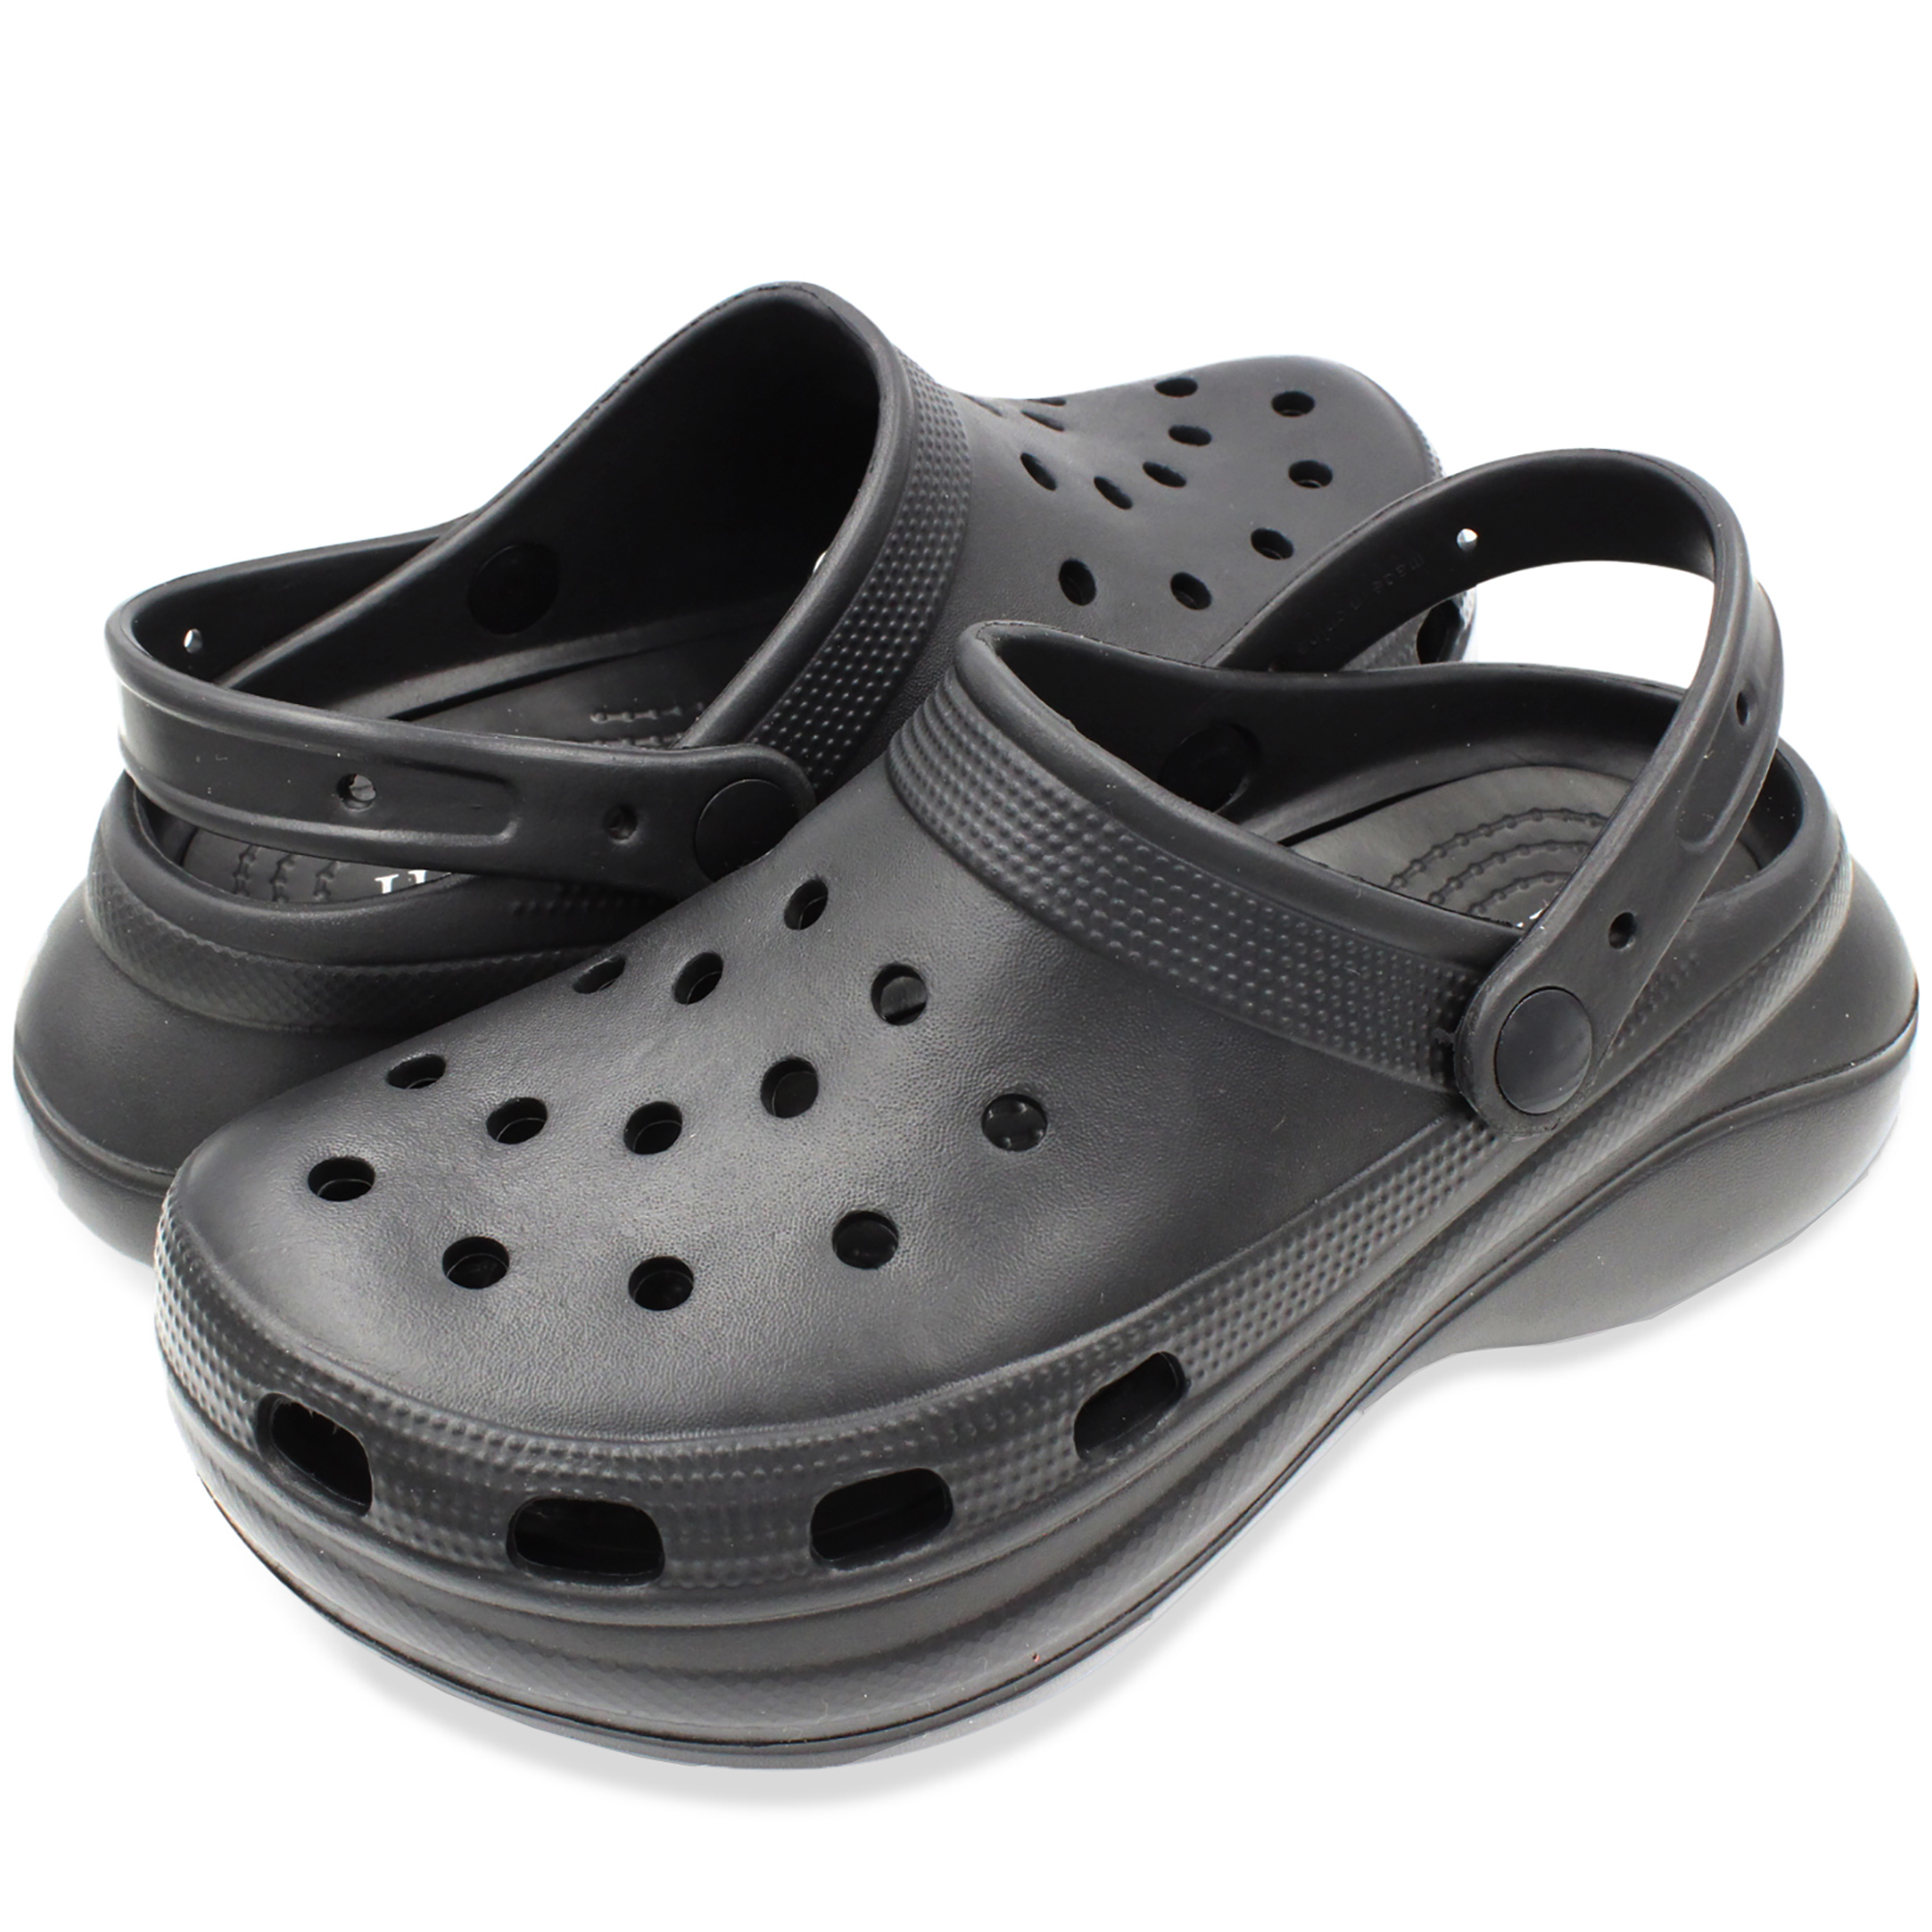 Womens Clogs Garden Platform Sandals Nurse Slip On Shoes | eBay